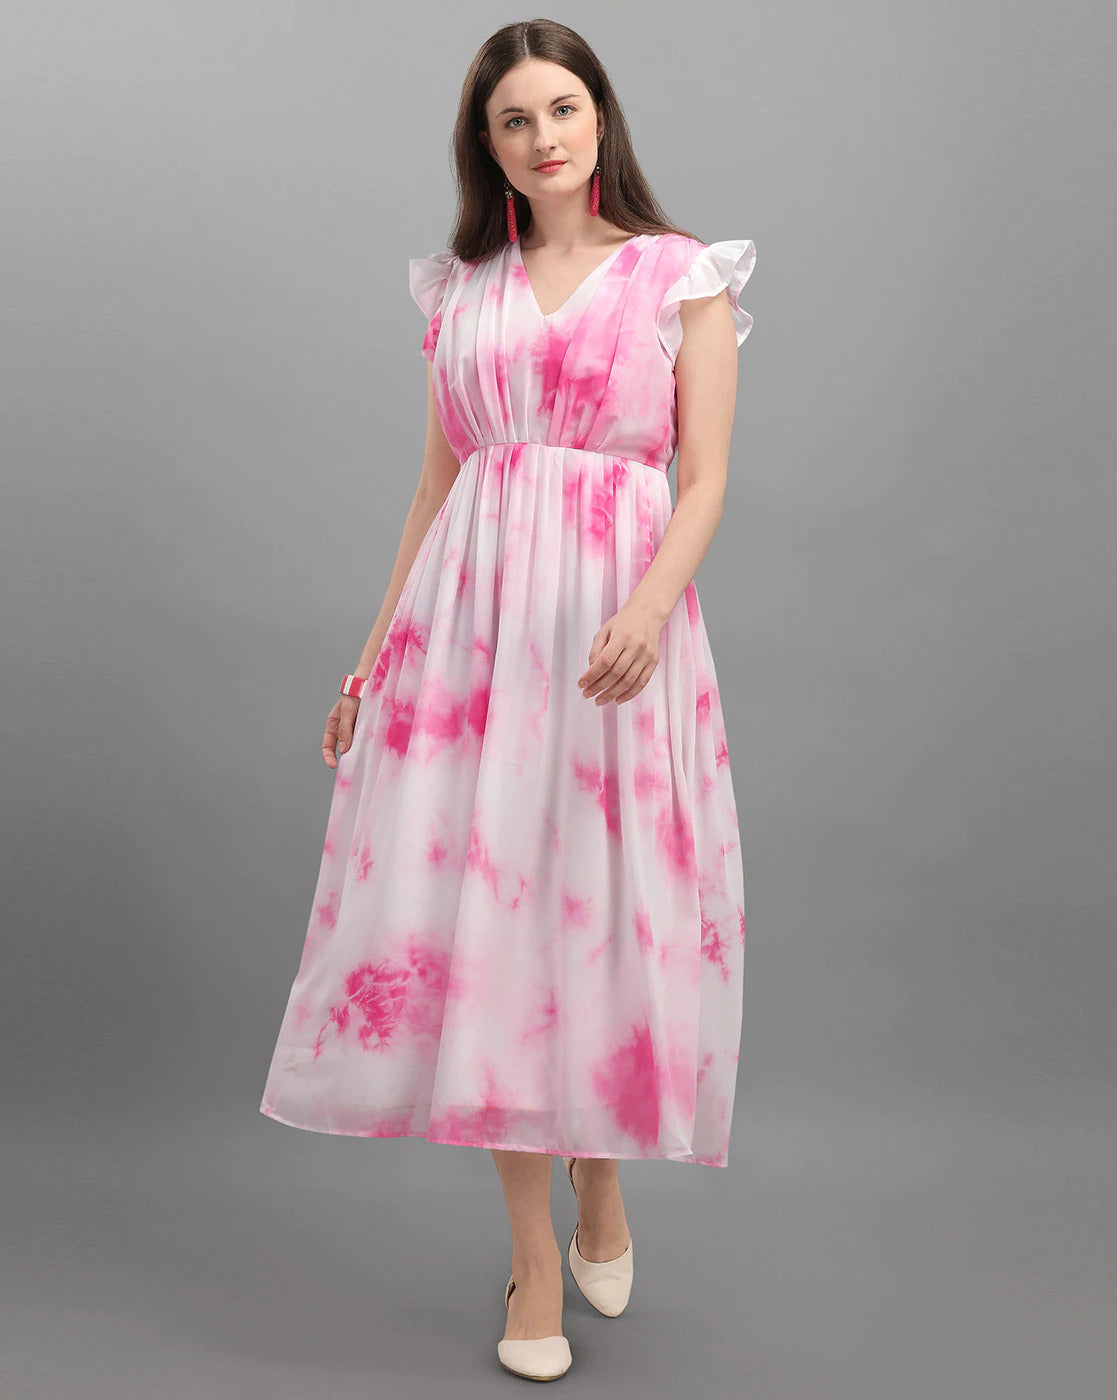 The Vendorvilla Tie-Dye Printed Long Flared Dress For Women